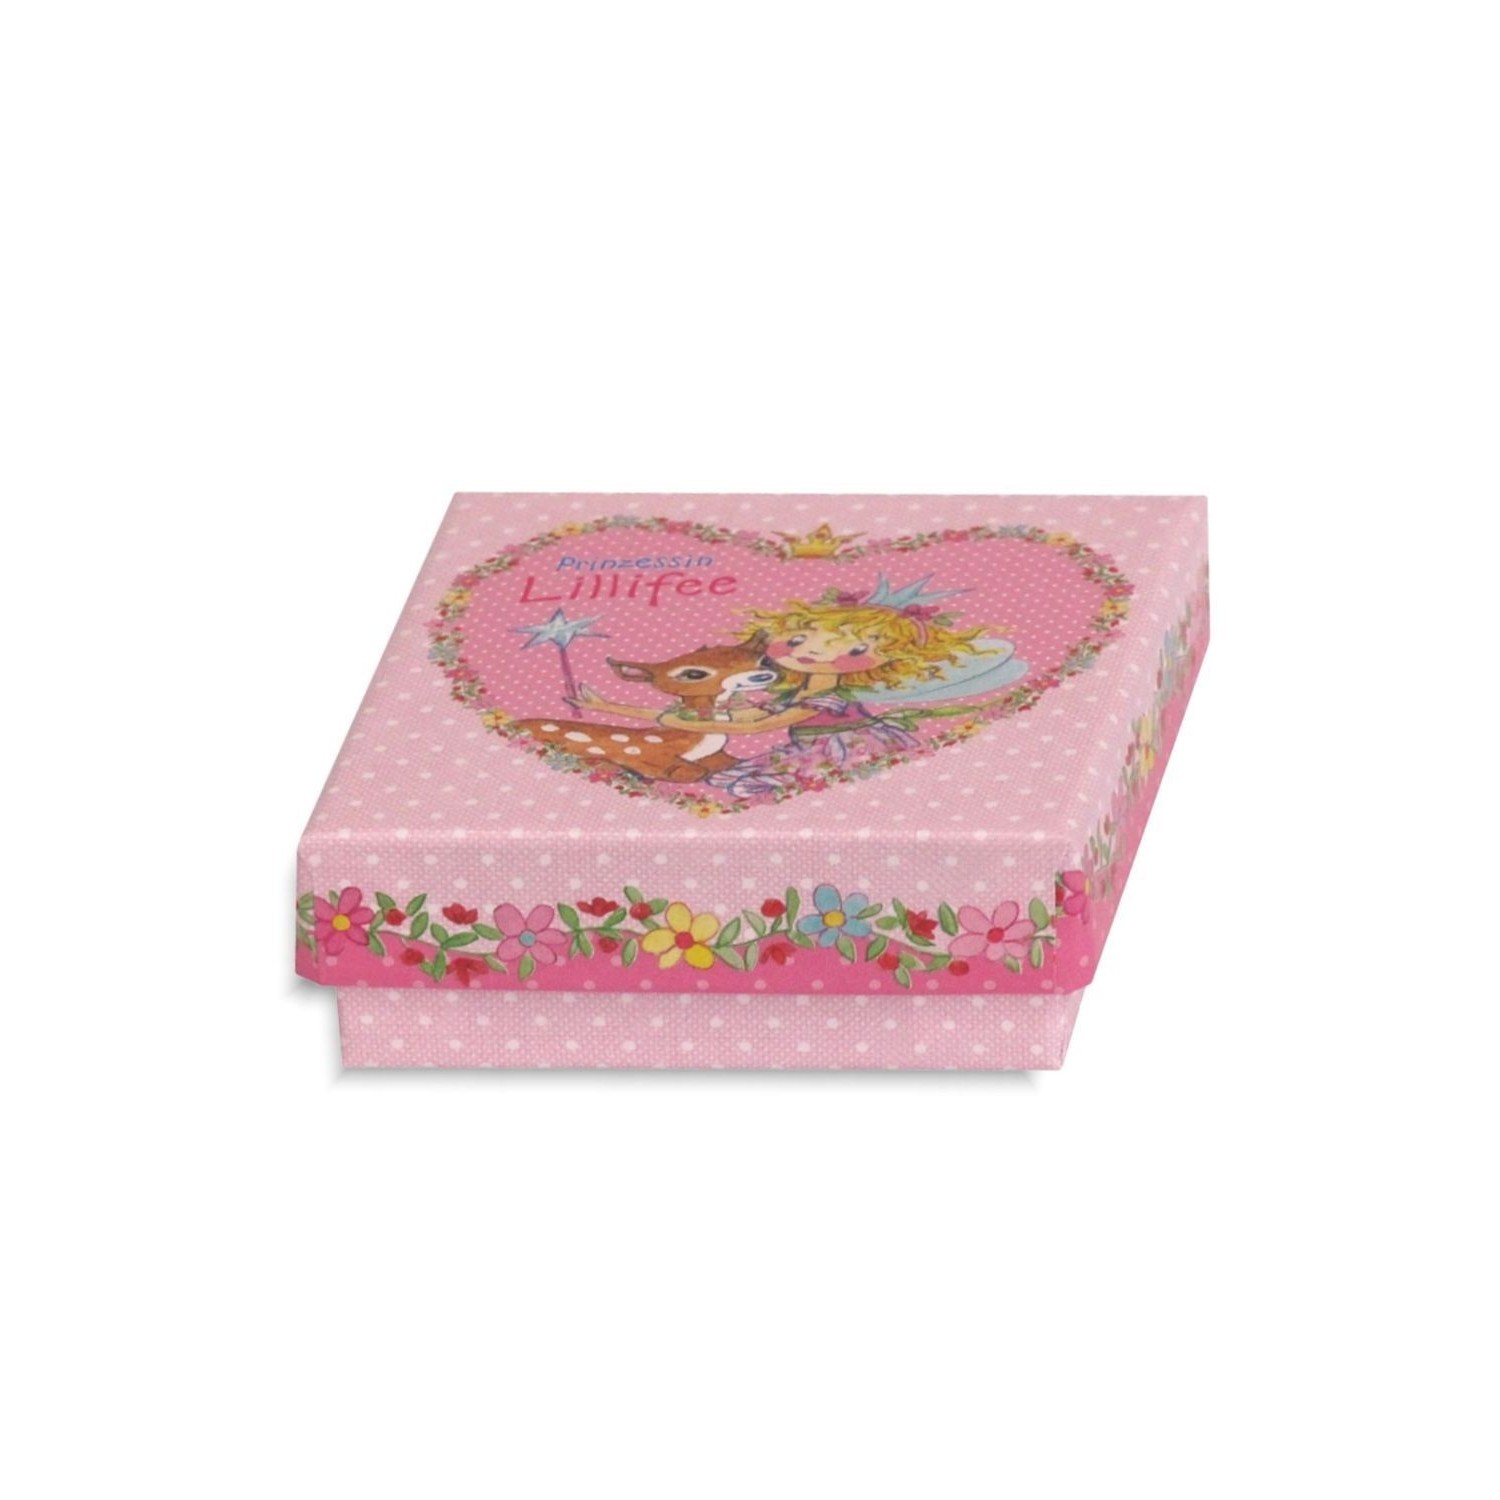 Kinderkette rosa Schuhe von Prinzessin Lillifee, 2035973